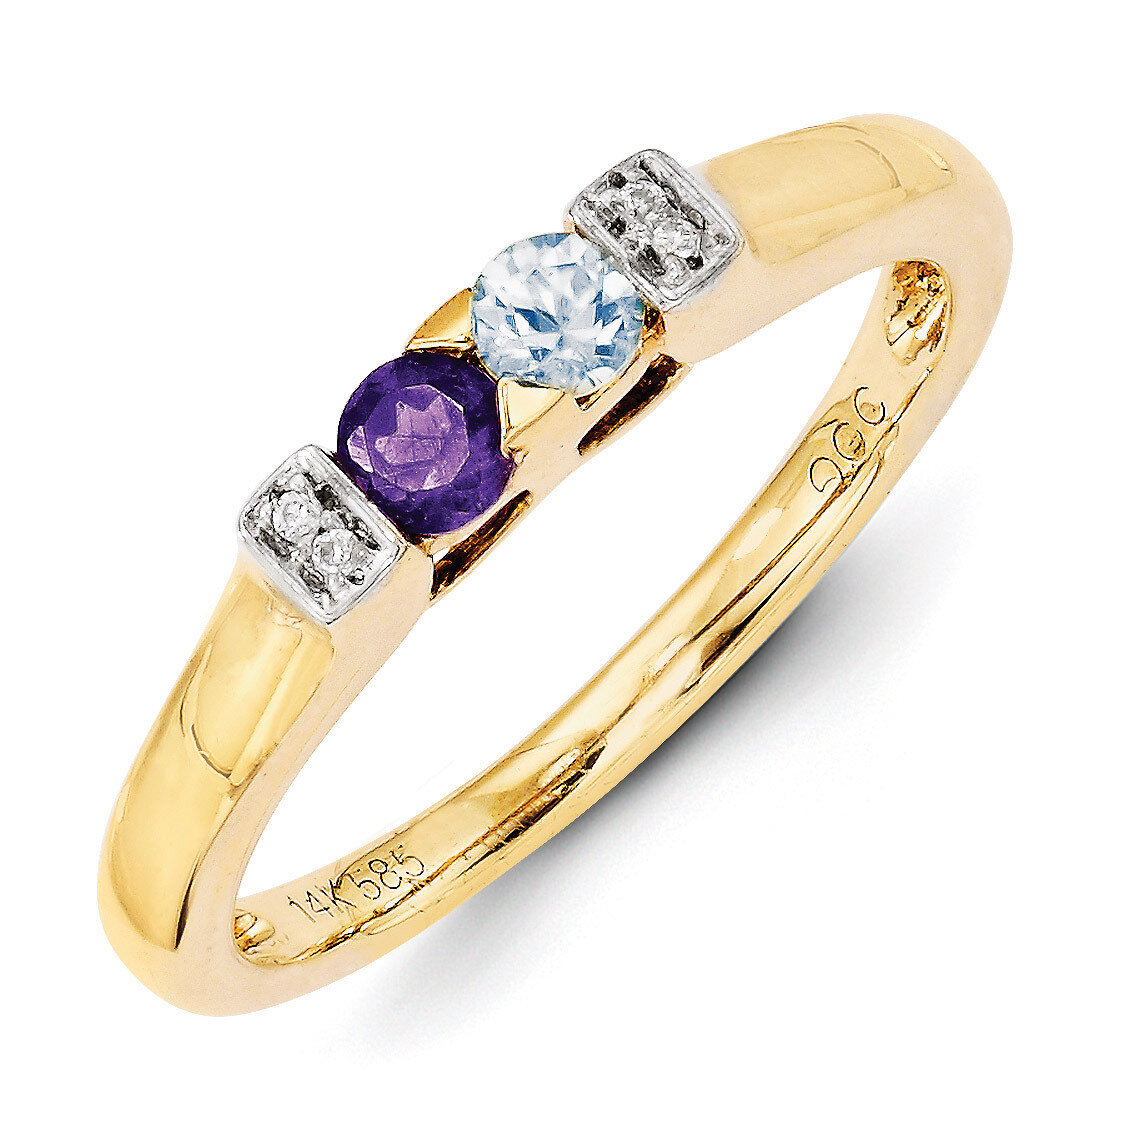 2 Birthstones Family Jewelry Diamond Semi-Set Ring 14k Yellow Gold XMR35/2